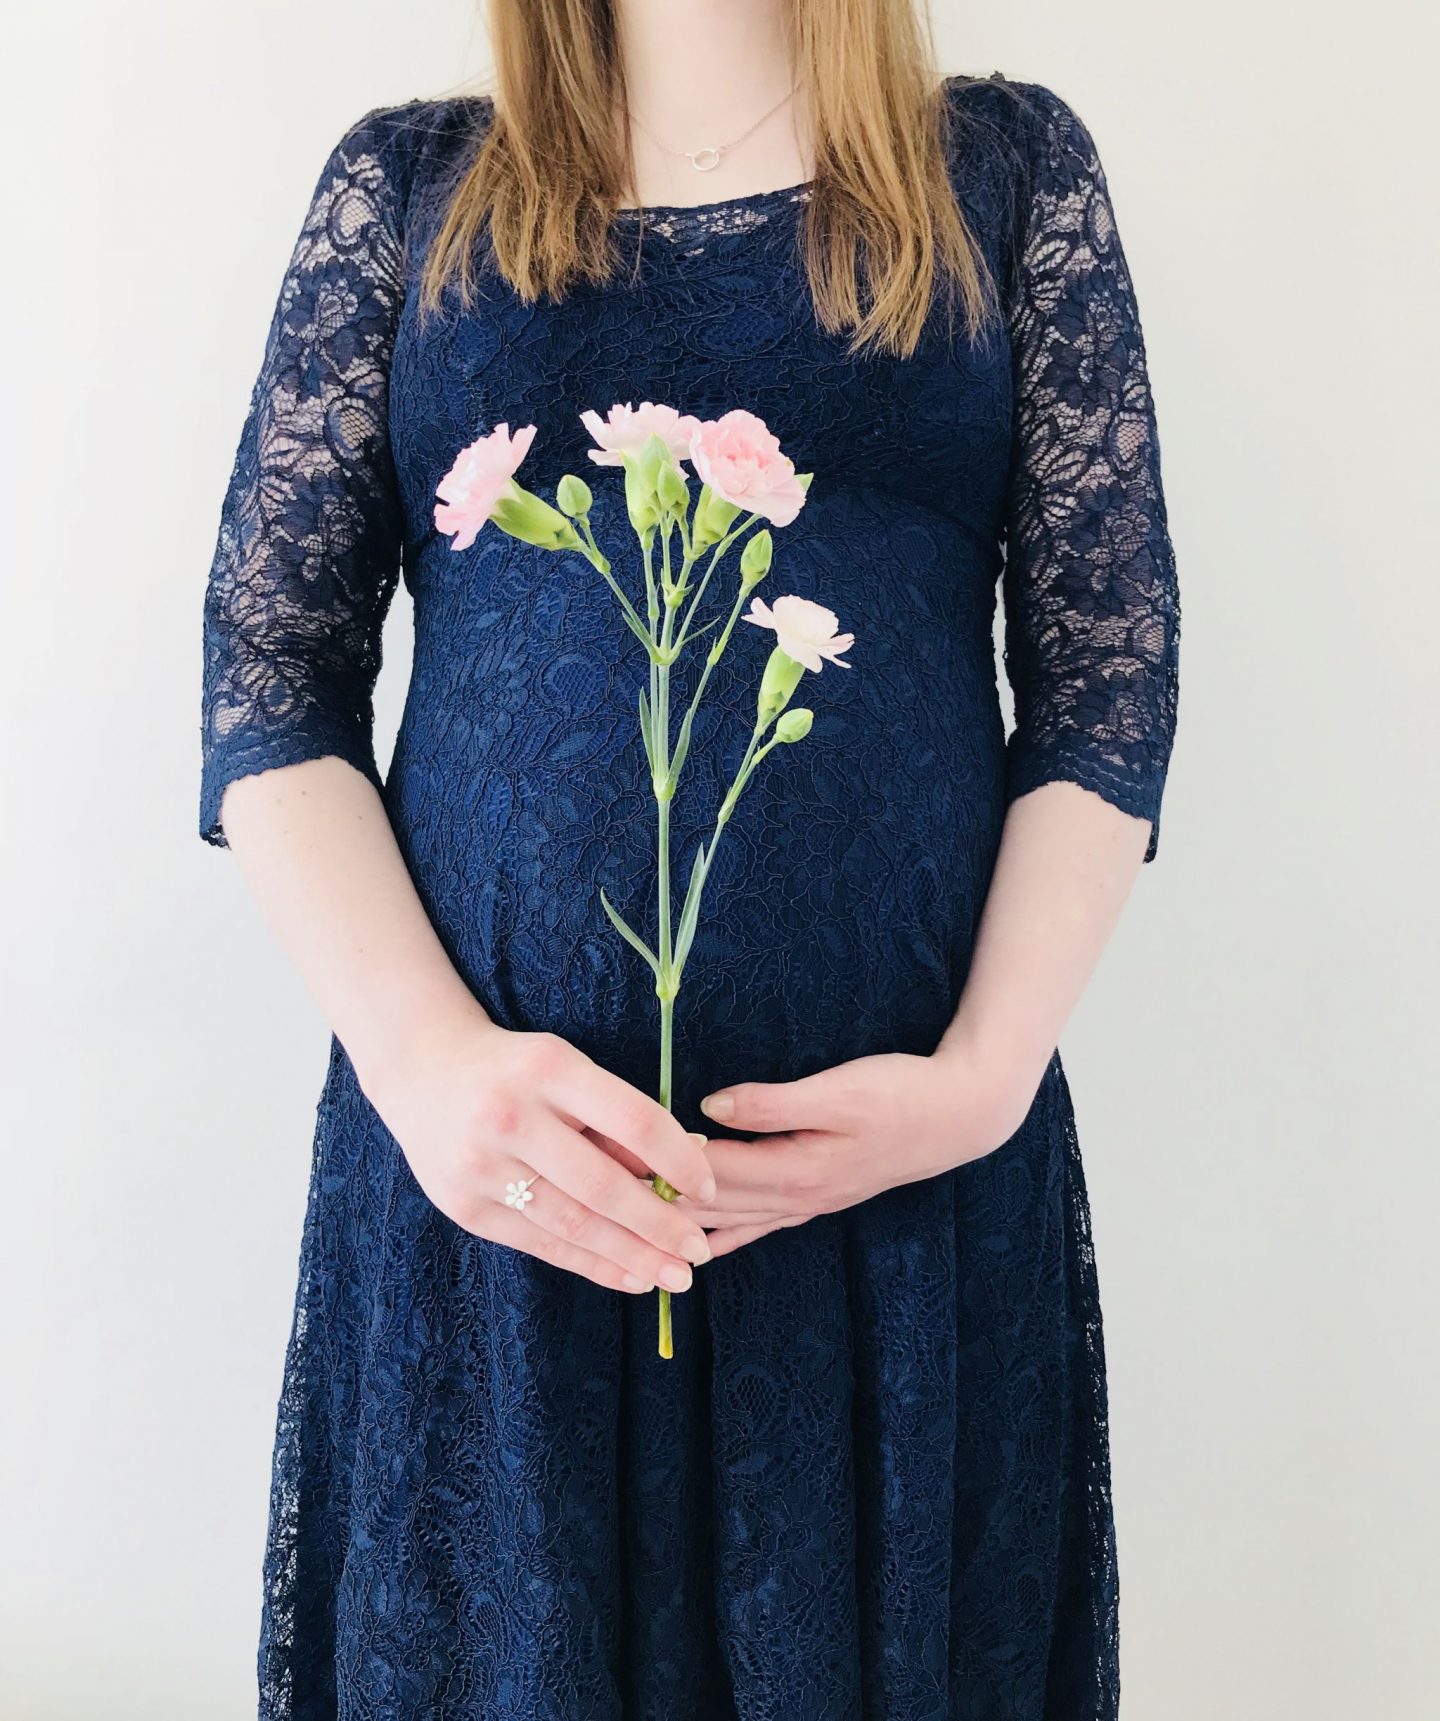 Tiffany Rose Maternity Dresses Haul